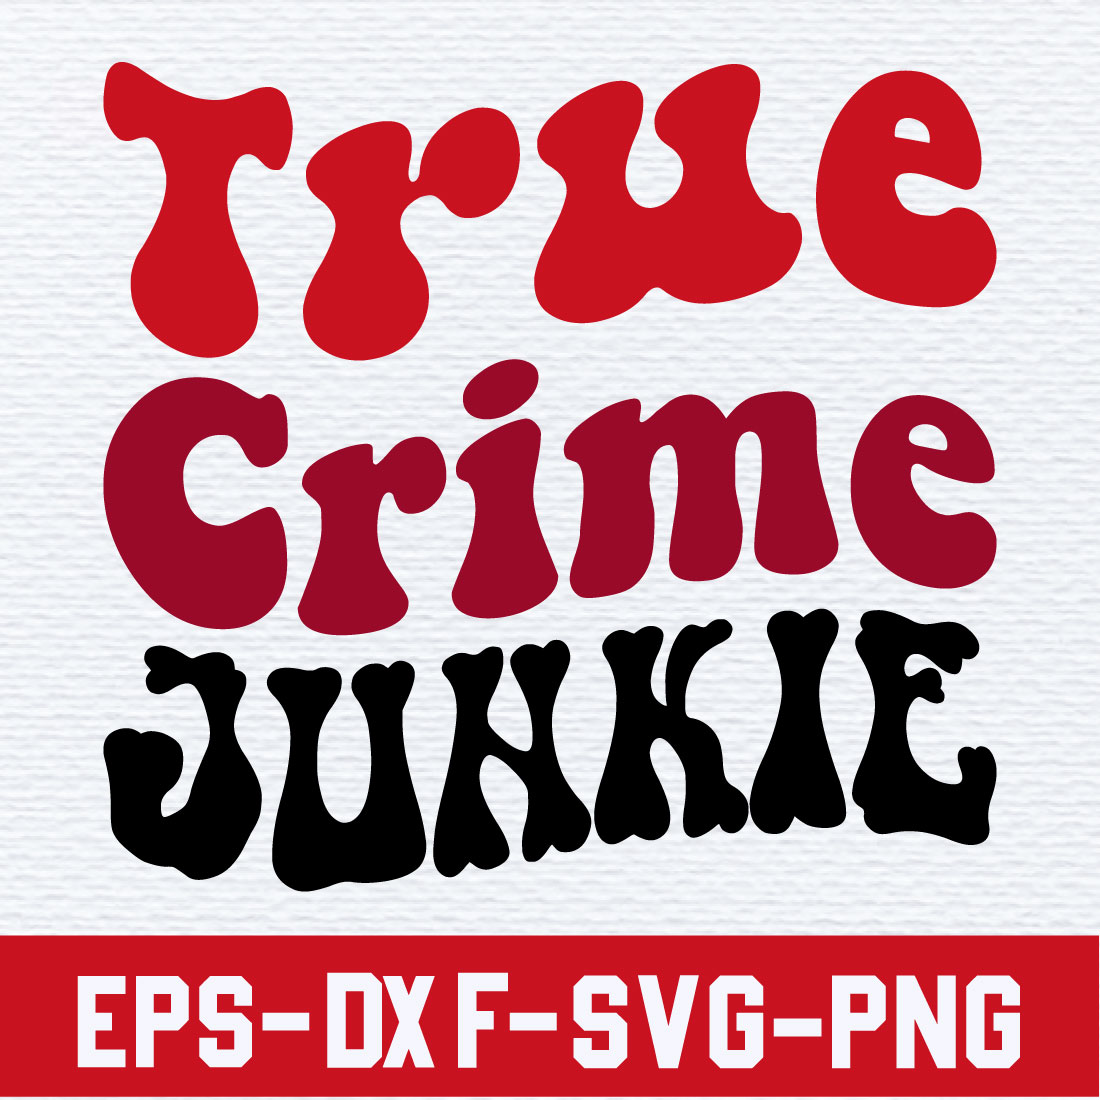 True Crime Junkie cover image.